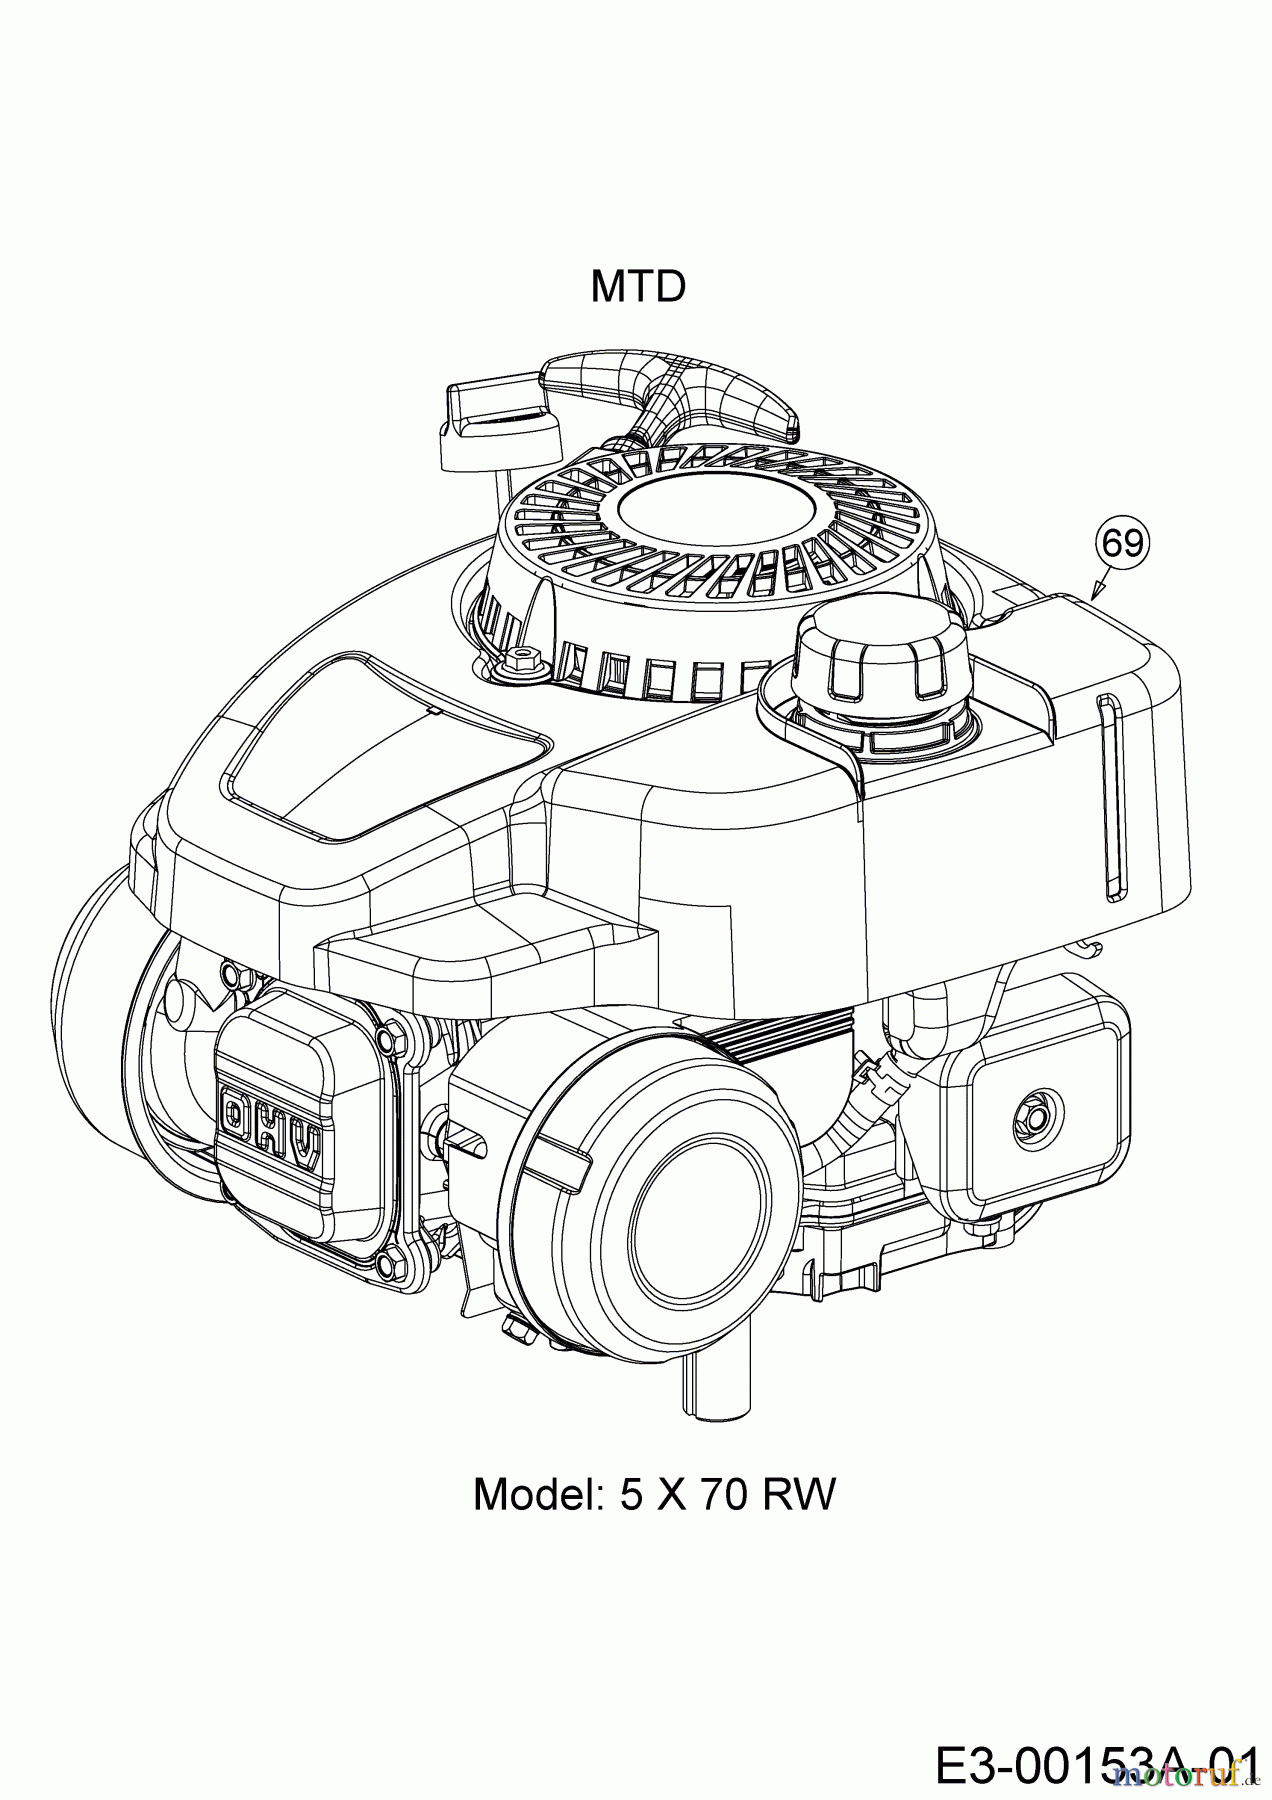  Cub Cadet Petrol mower self propelled LM3 ER53 12AQC6J4603   (2020) Engine MTD